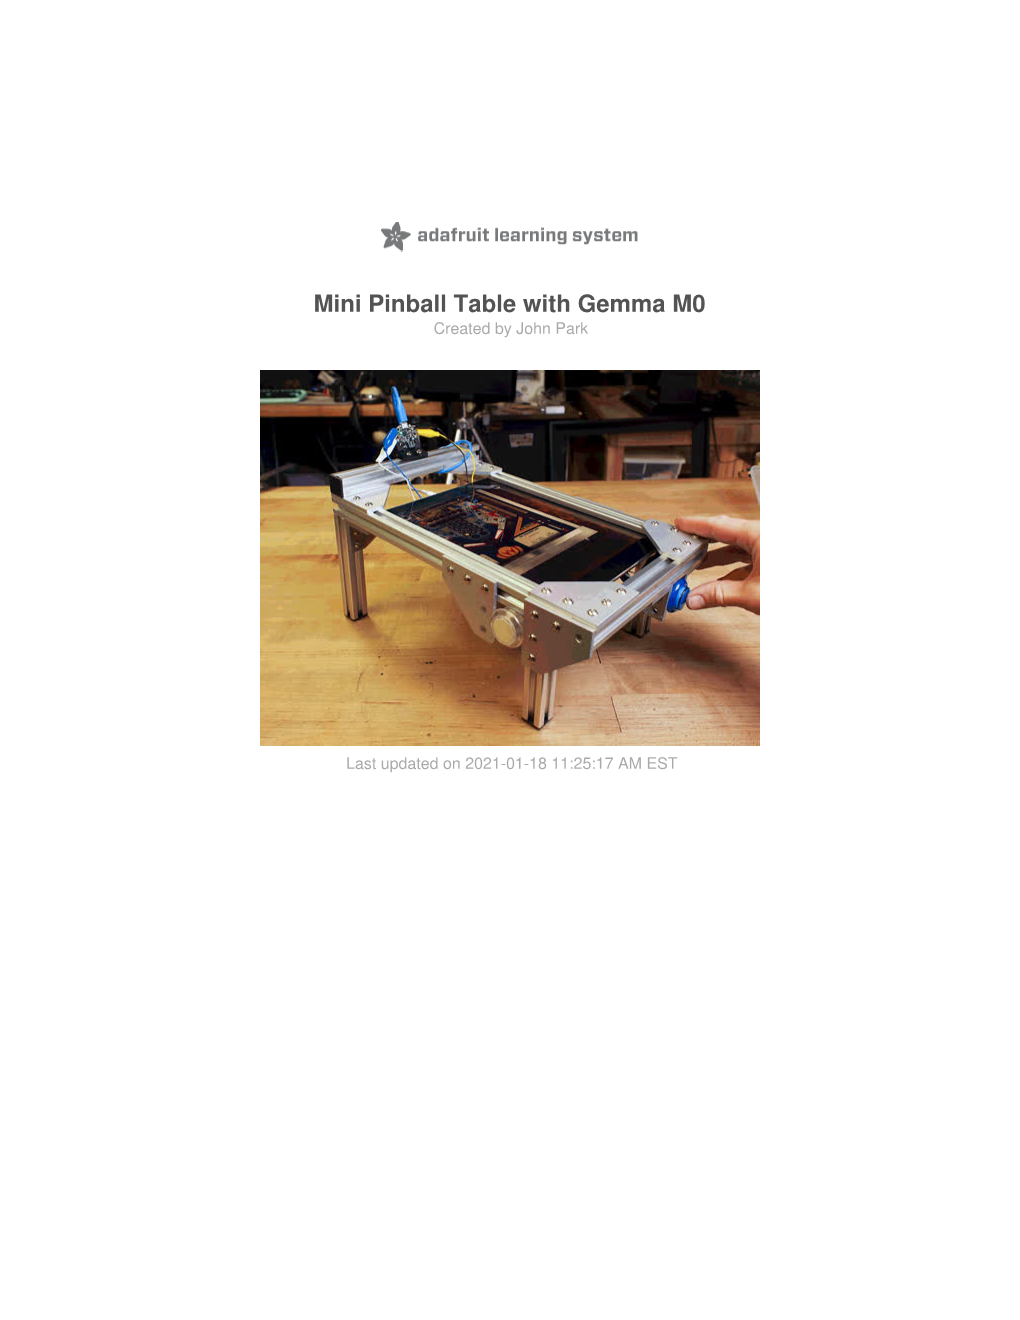 Mini Pinball Table with Gemma M0 Created by John Park